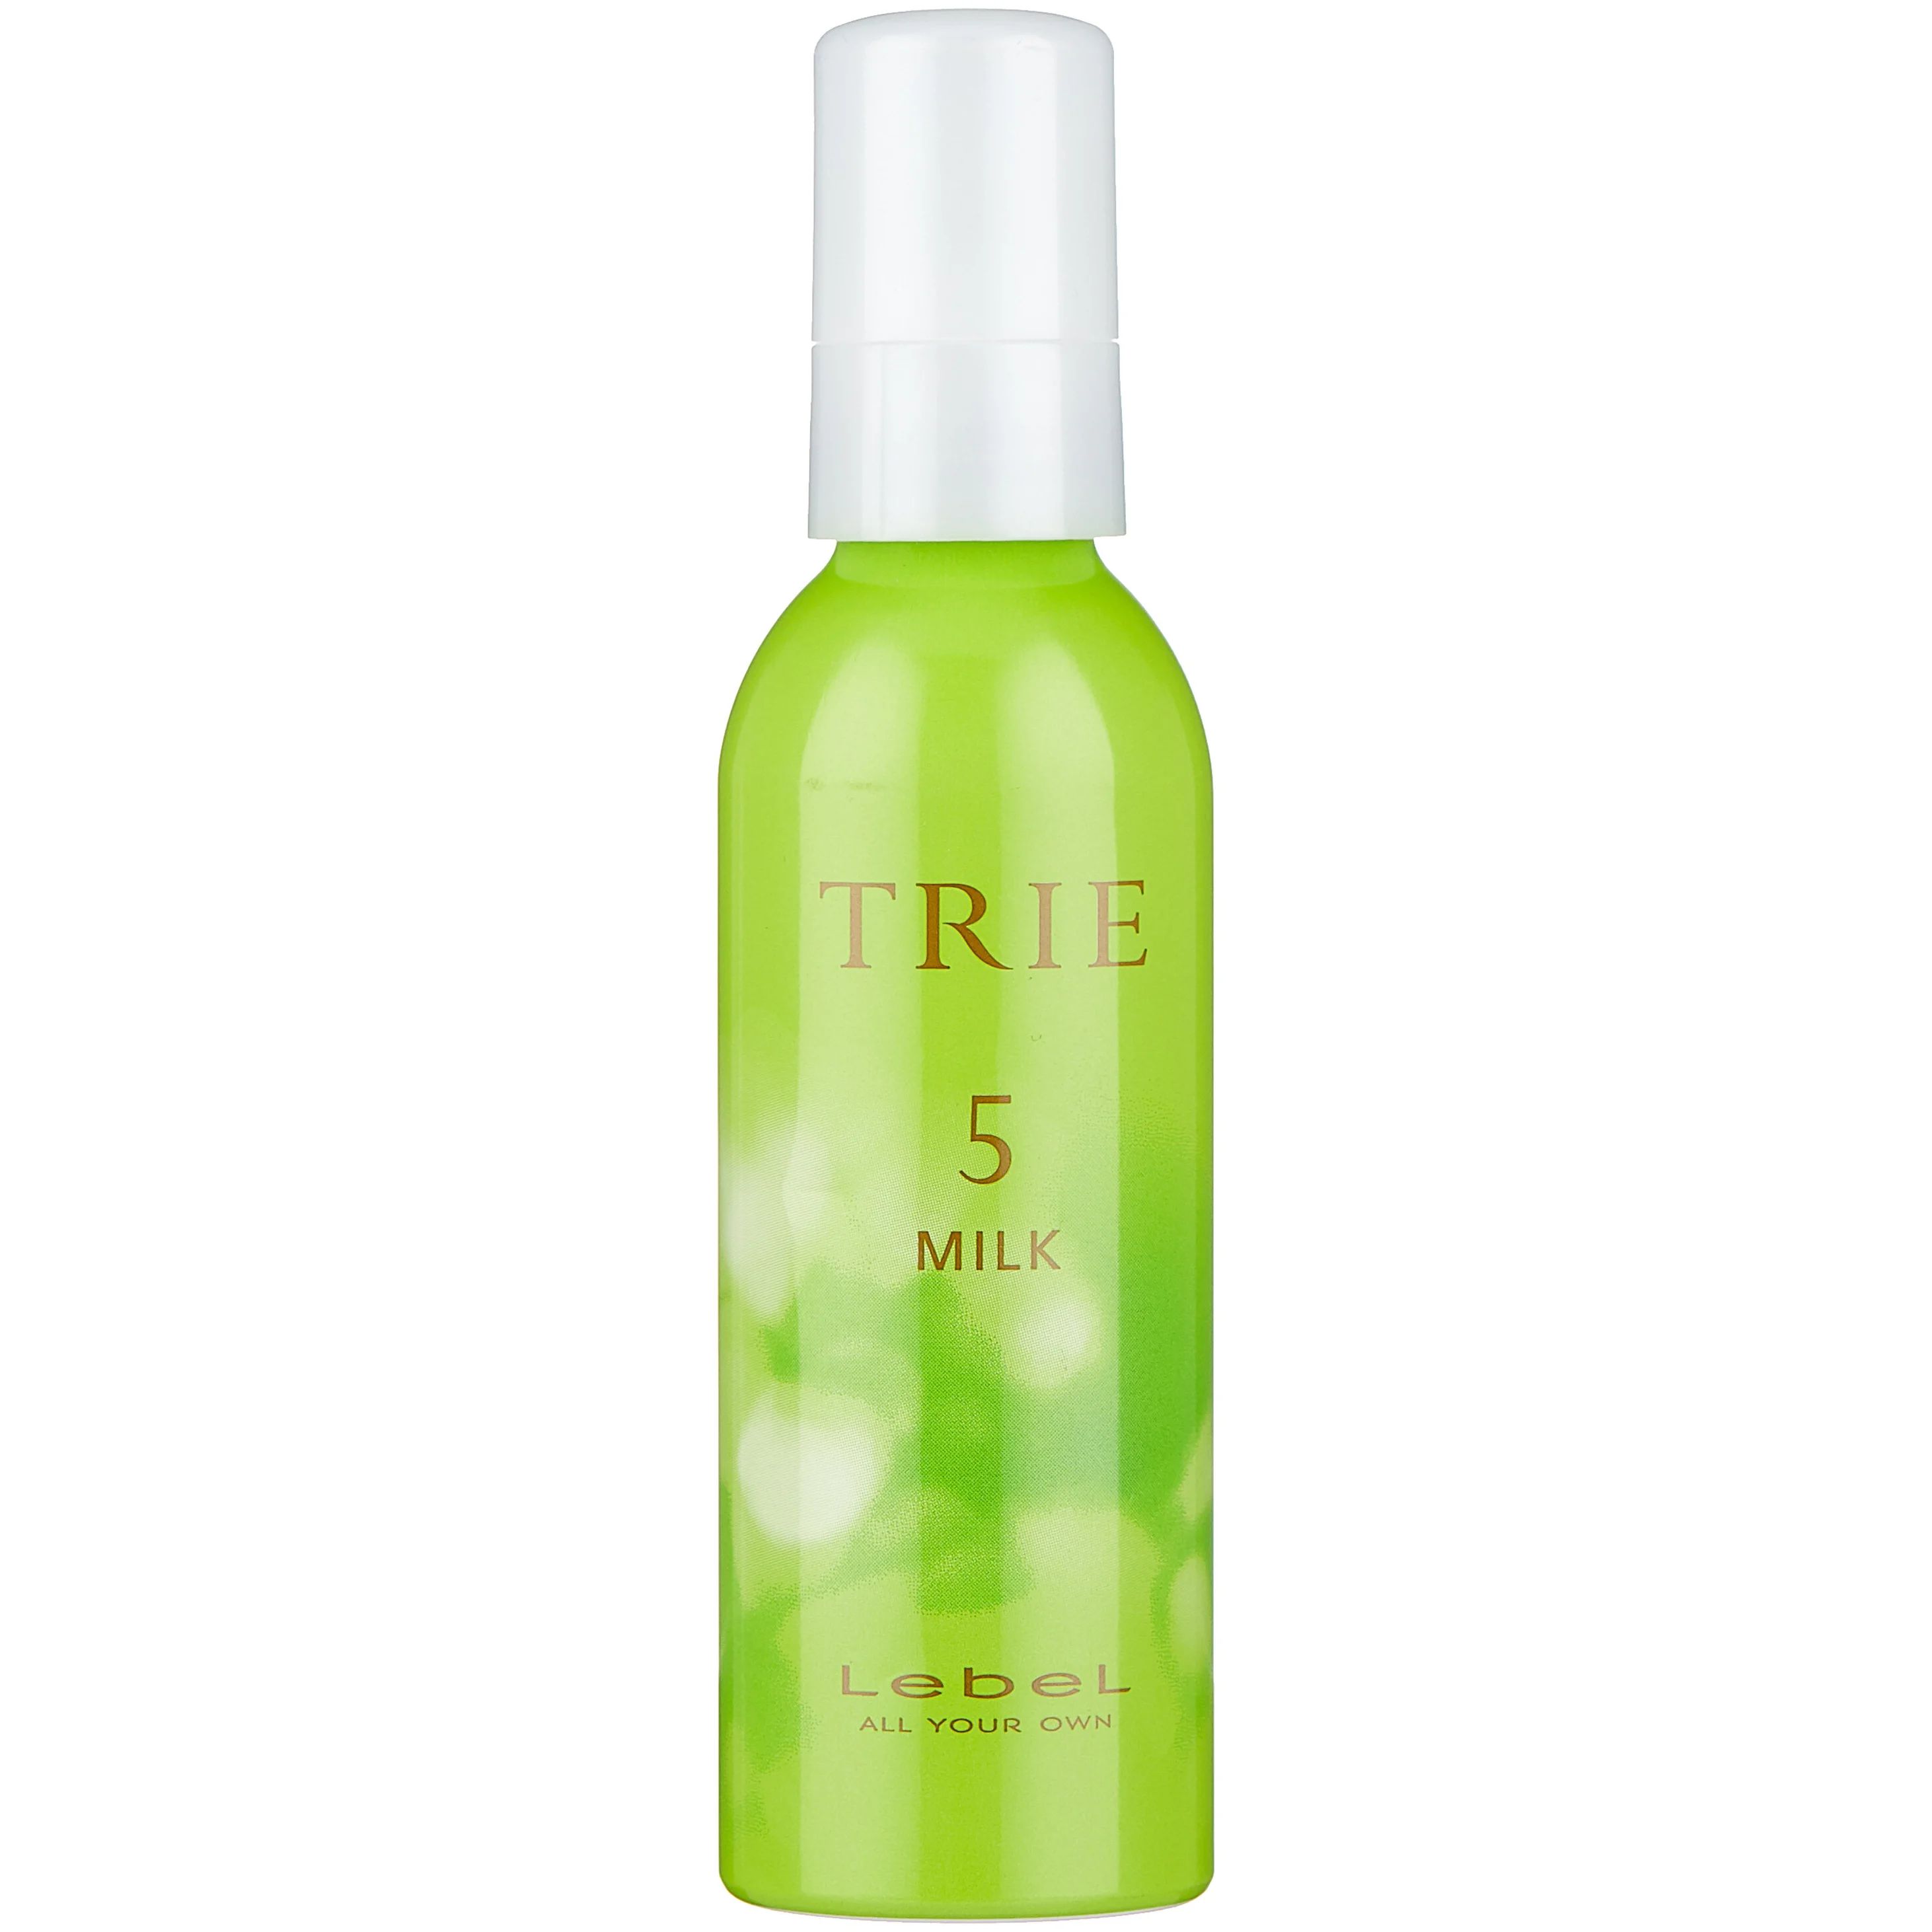 Молочко для укладки волос средней фиксации Lebel Cosmetics Trie Milk 5, 140 мл спрей lebel cosmetics trie 0 легкой фиксации